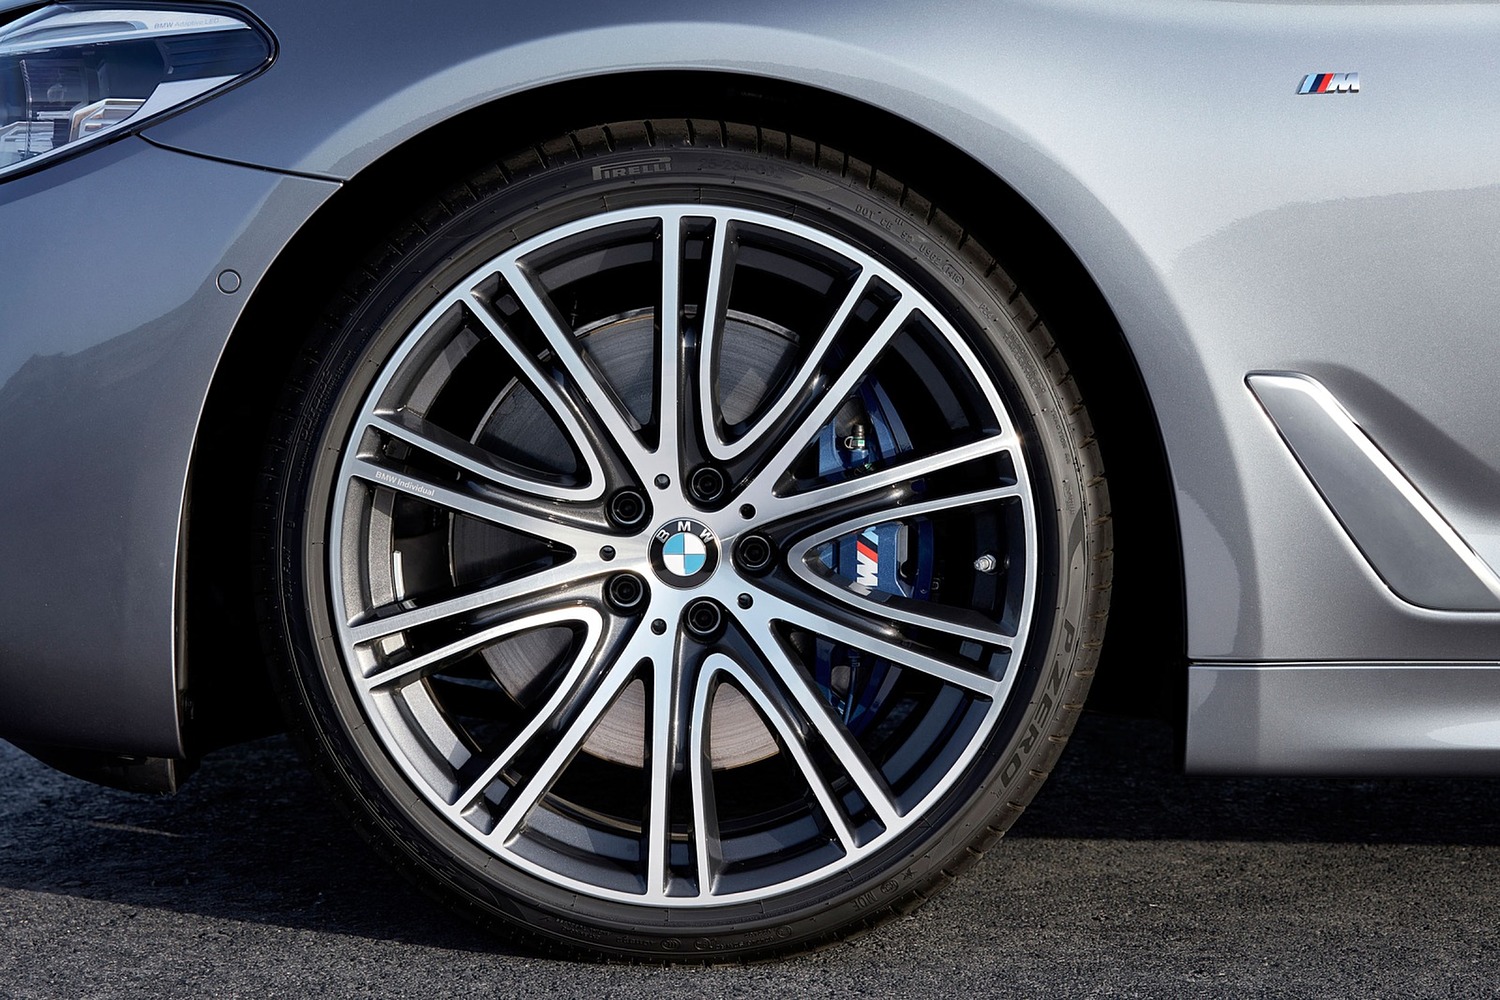 BMW 5 Series 540i Sedan Wheel. M Package Shown. (2017 model year shown)